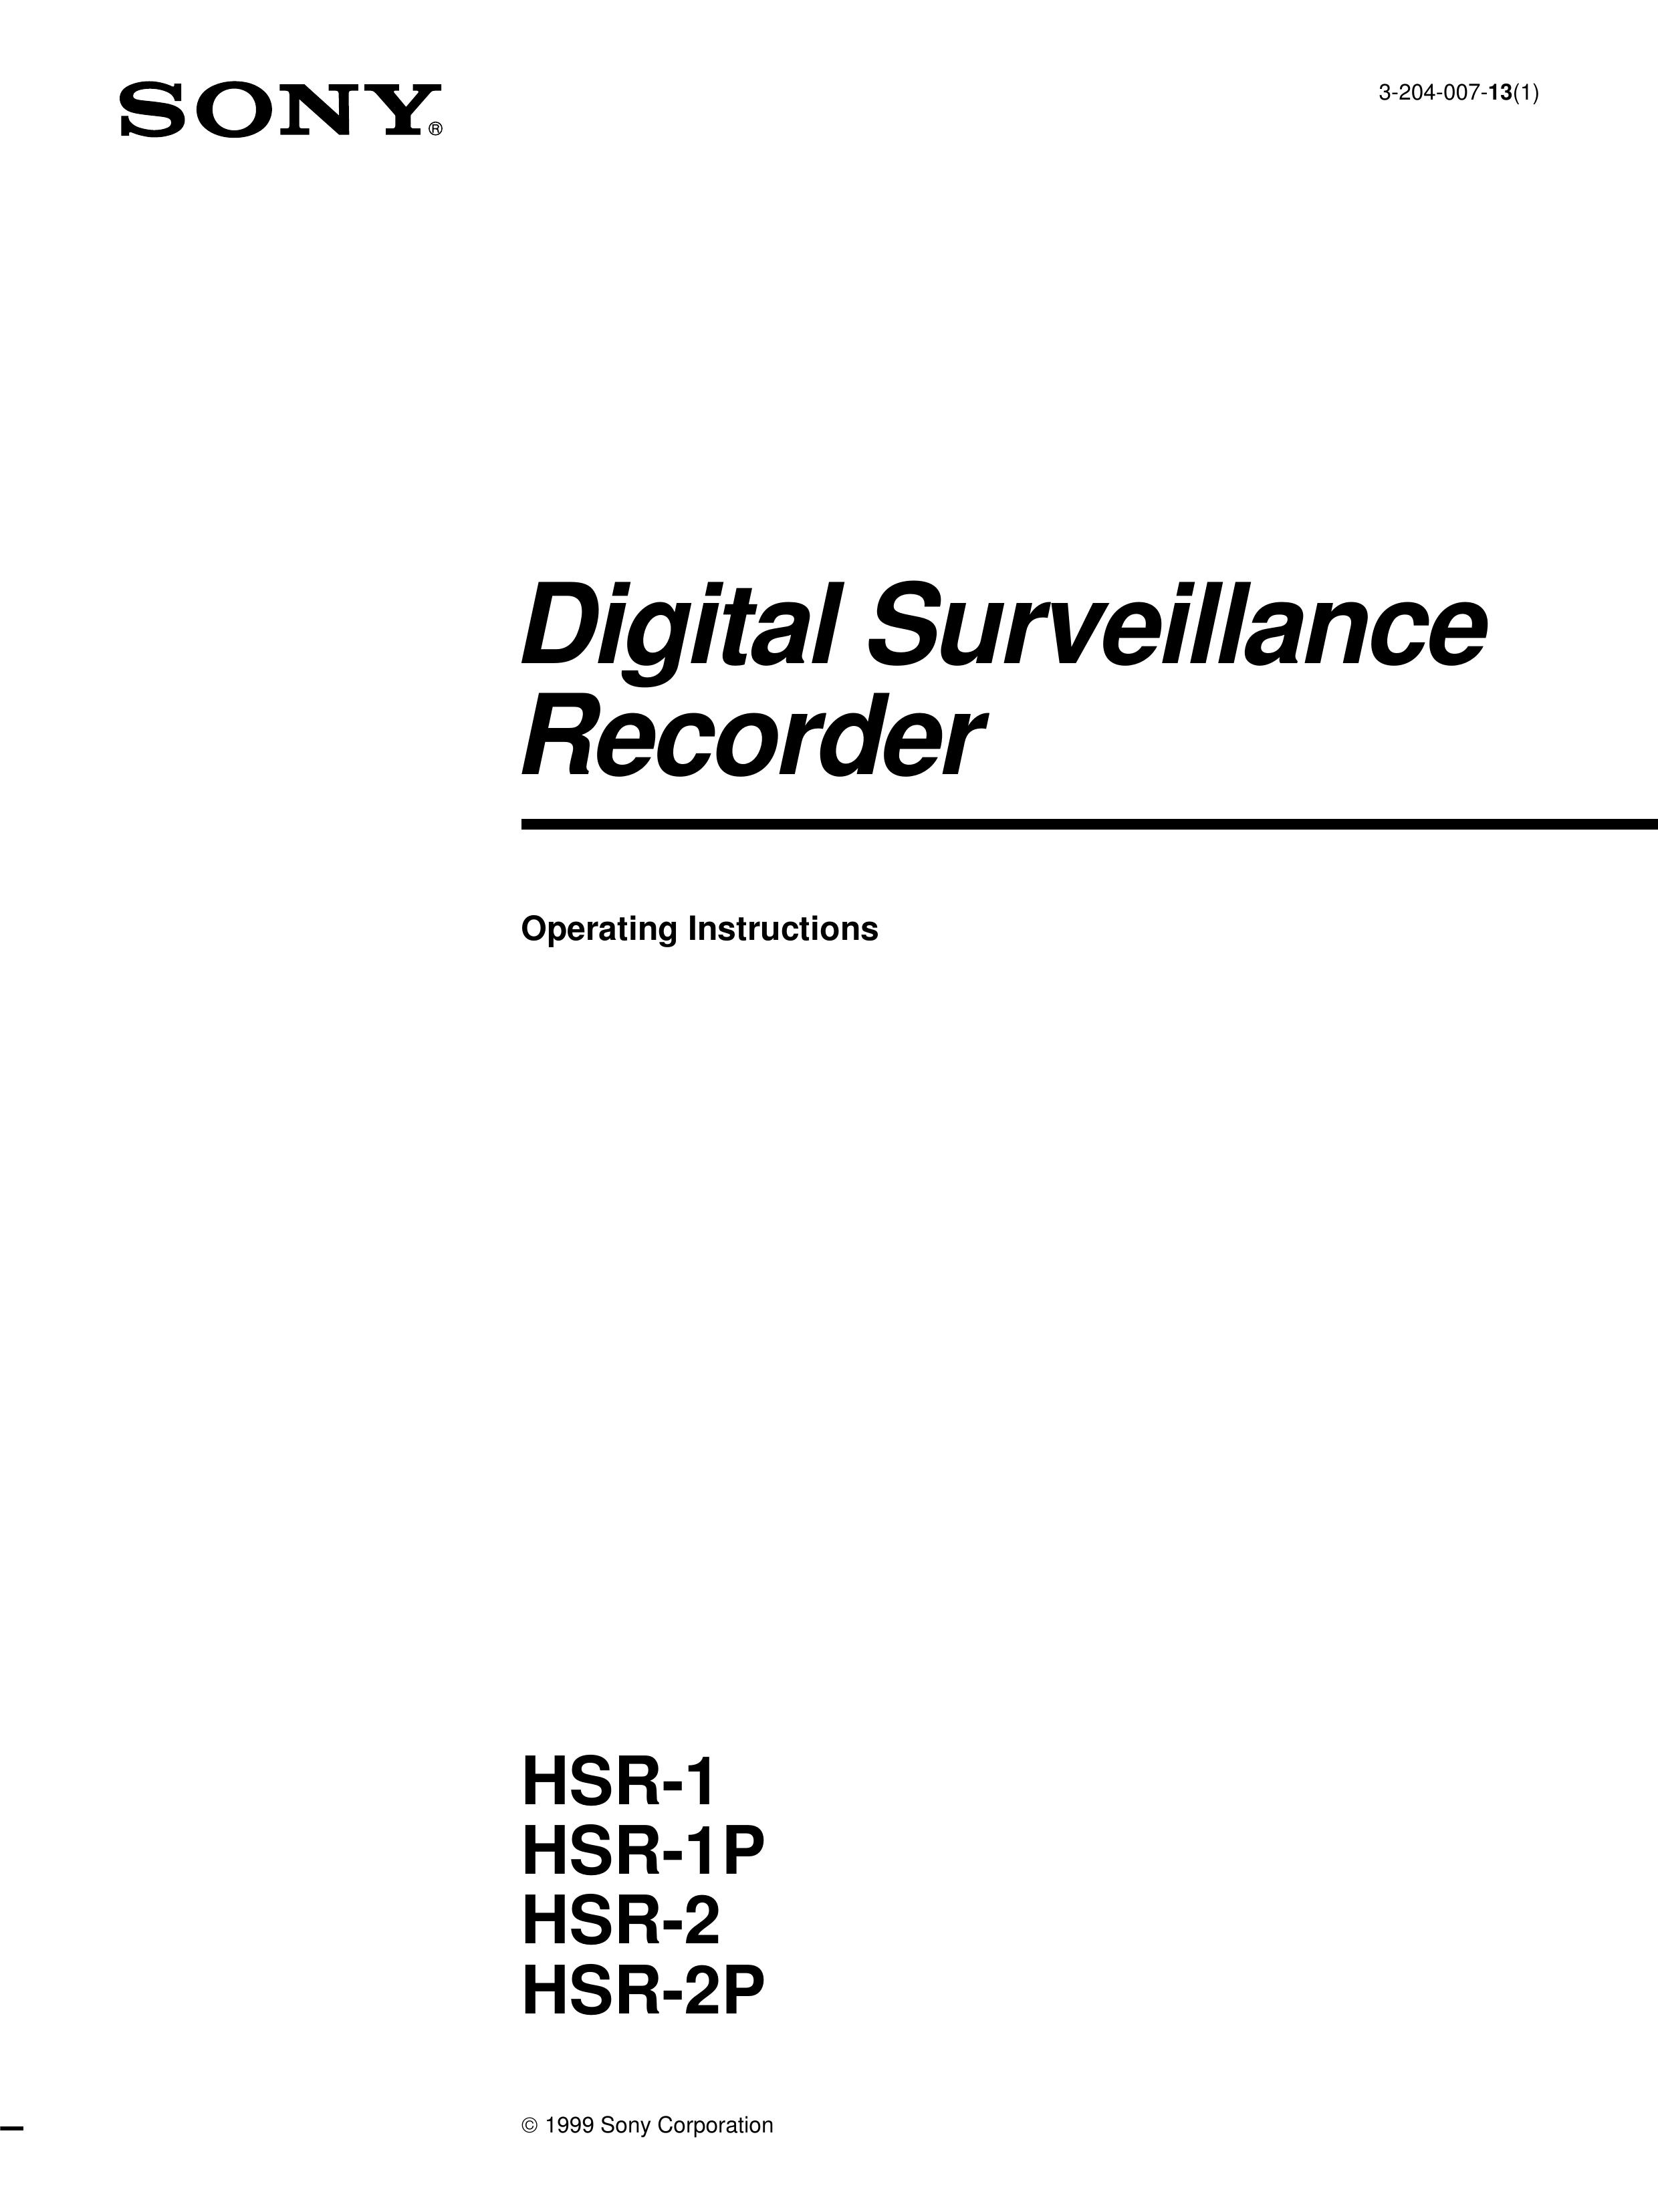 Sony HSR-1P Security Camera User Manual